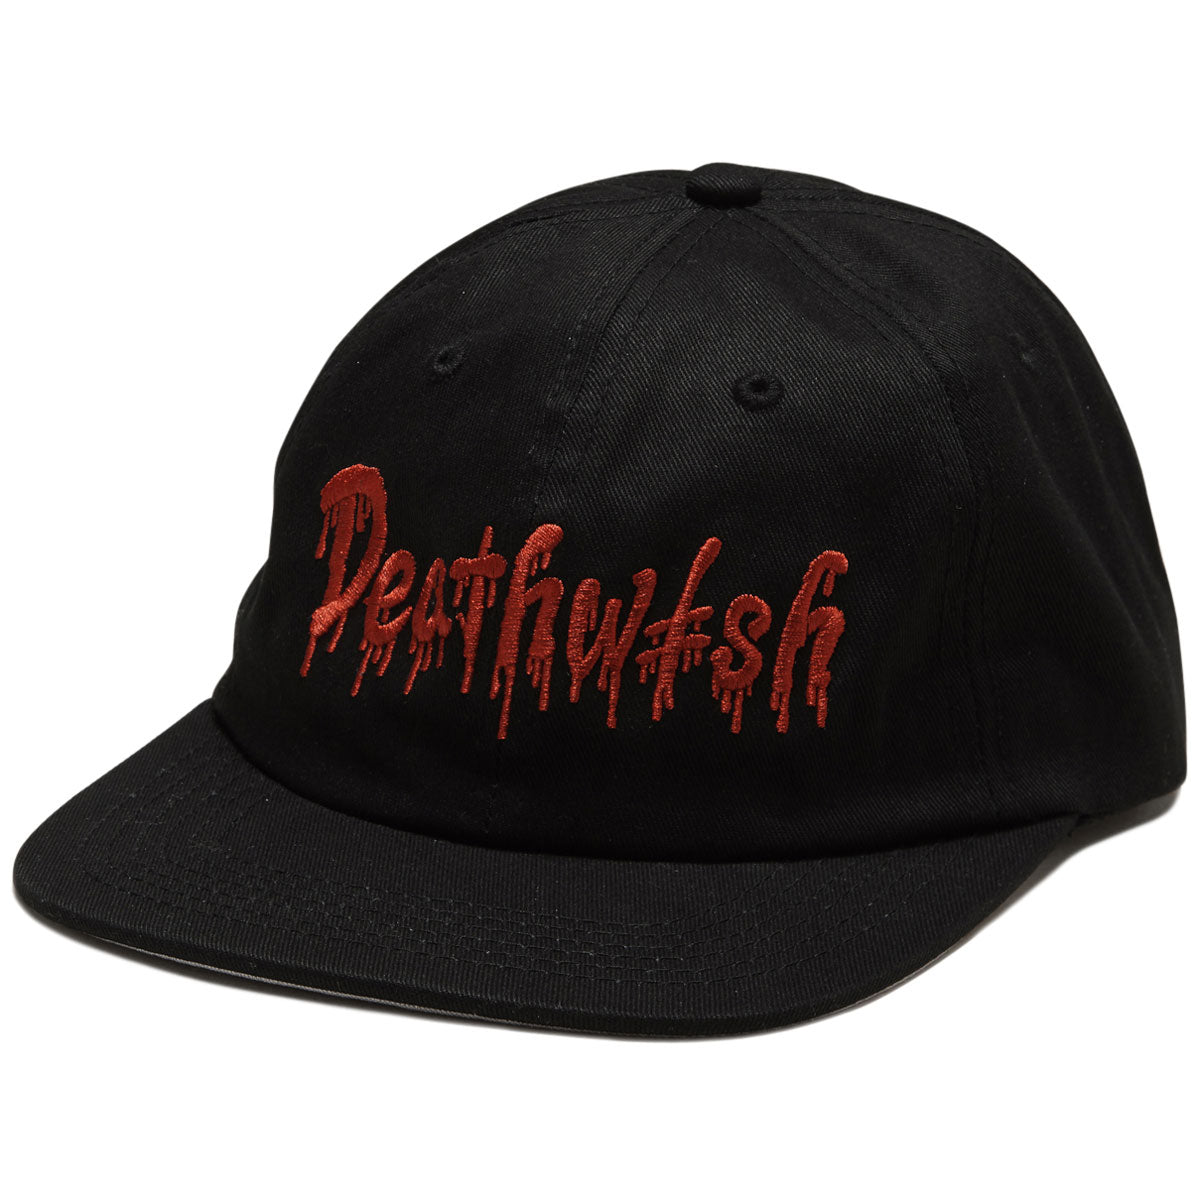 Deathwish Homicide Snapback Hat - Black image 1